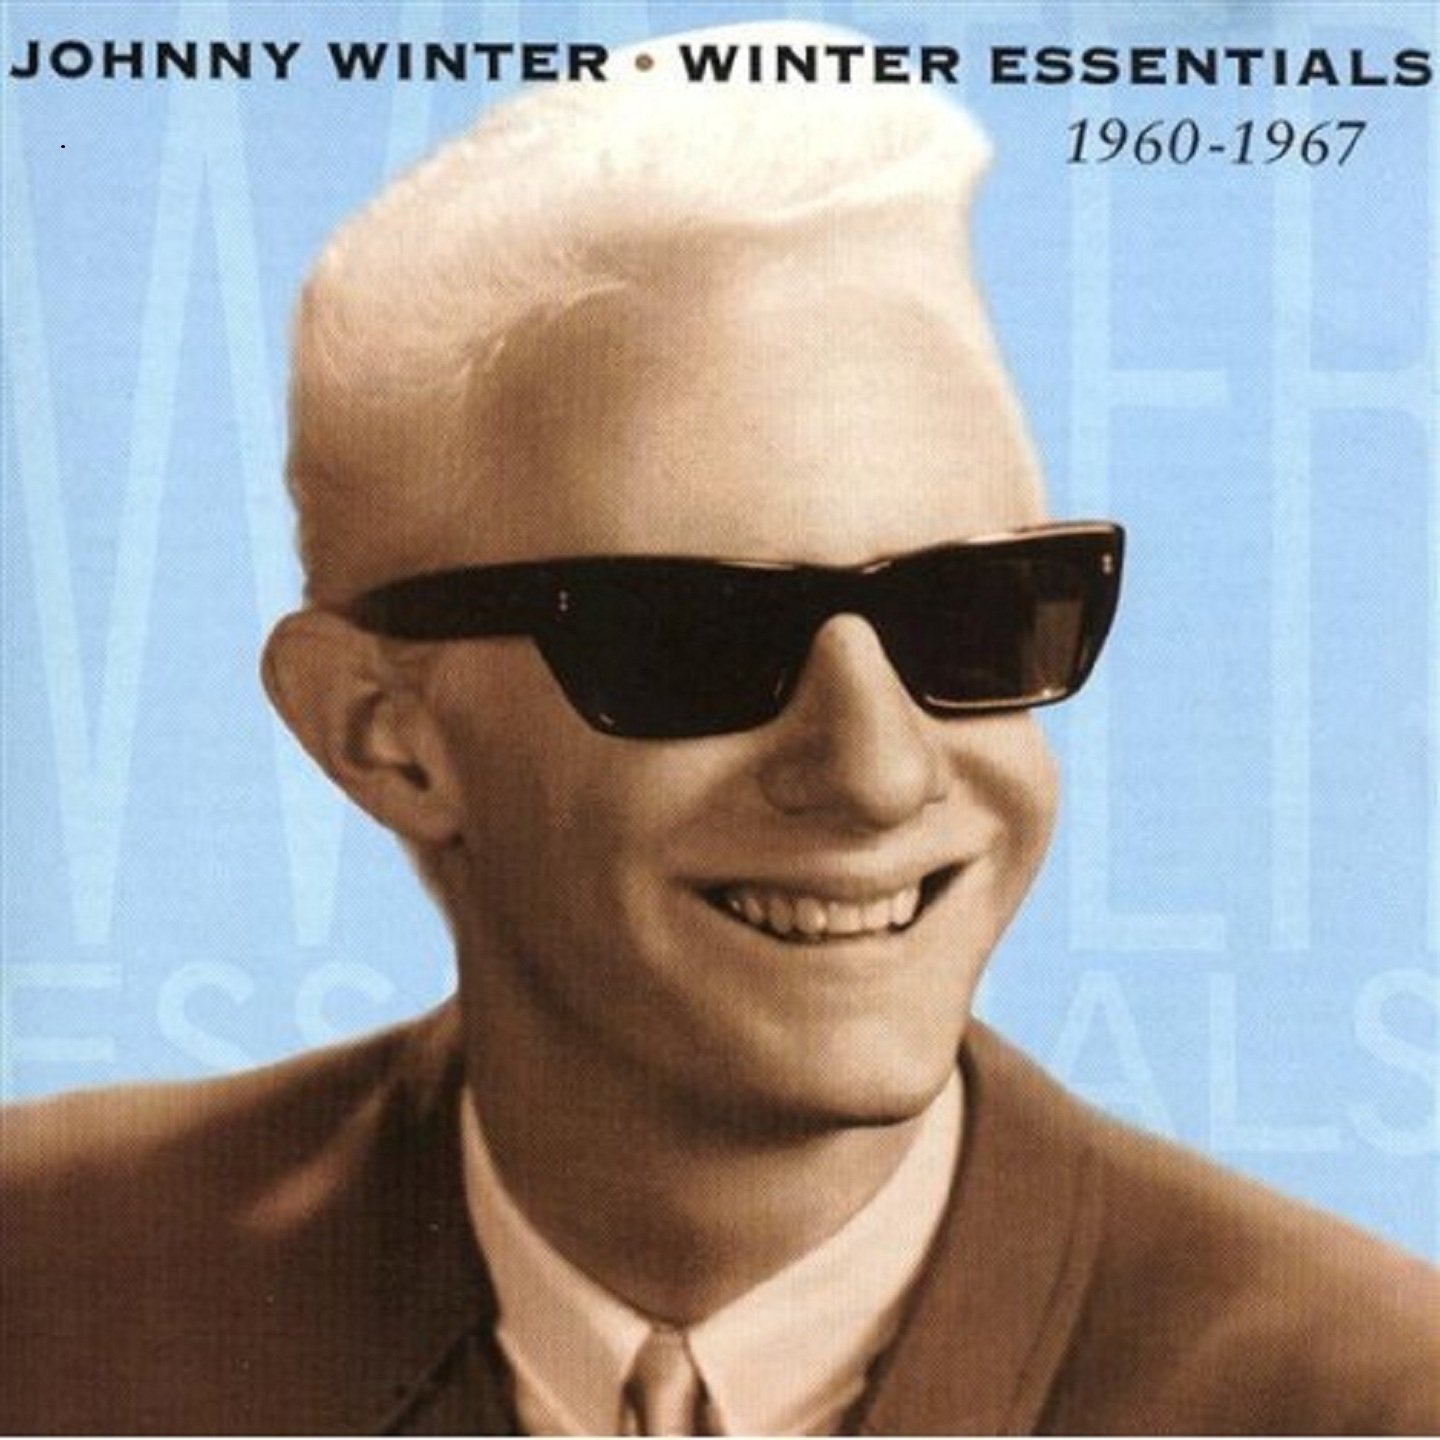 1960 1967. Джонни Винтер. Джонни альбом. Джонни песни. Johnny Winter фото певца.